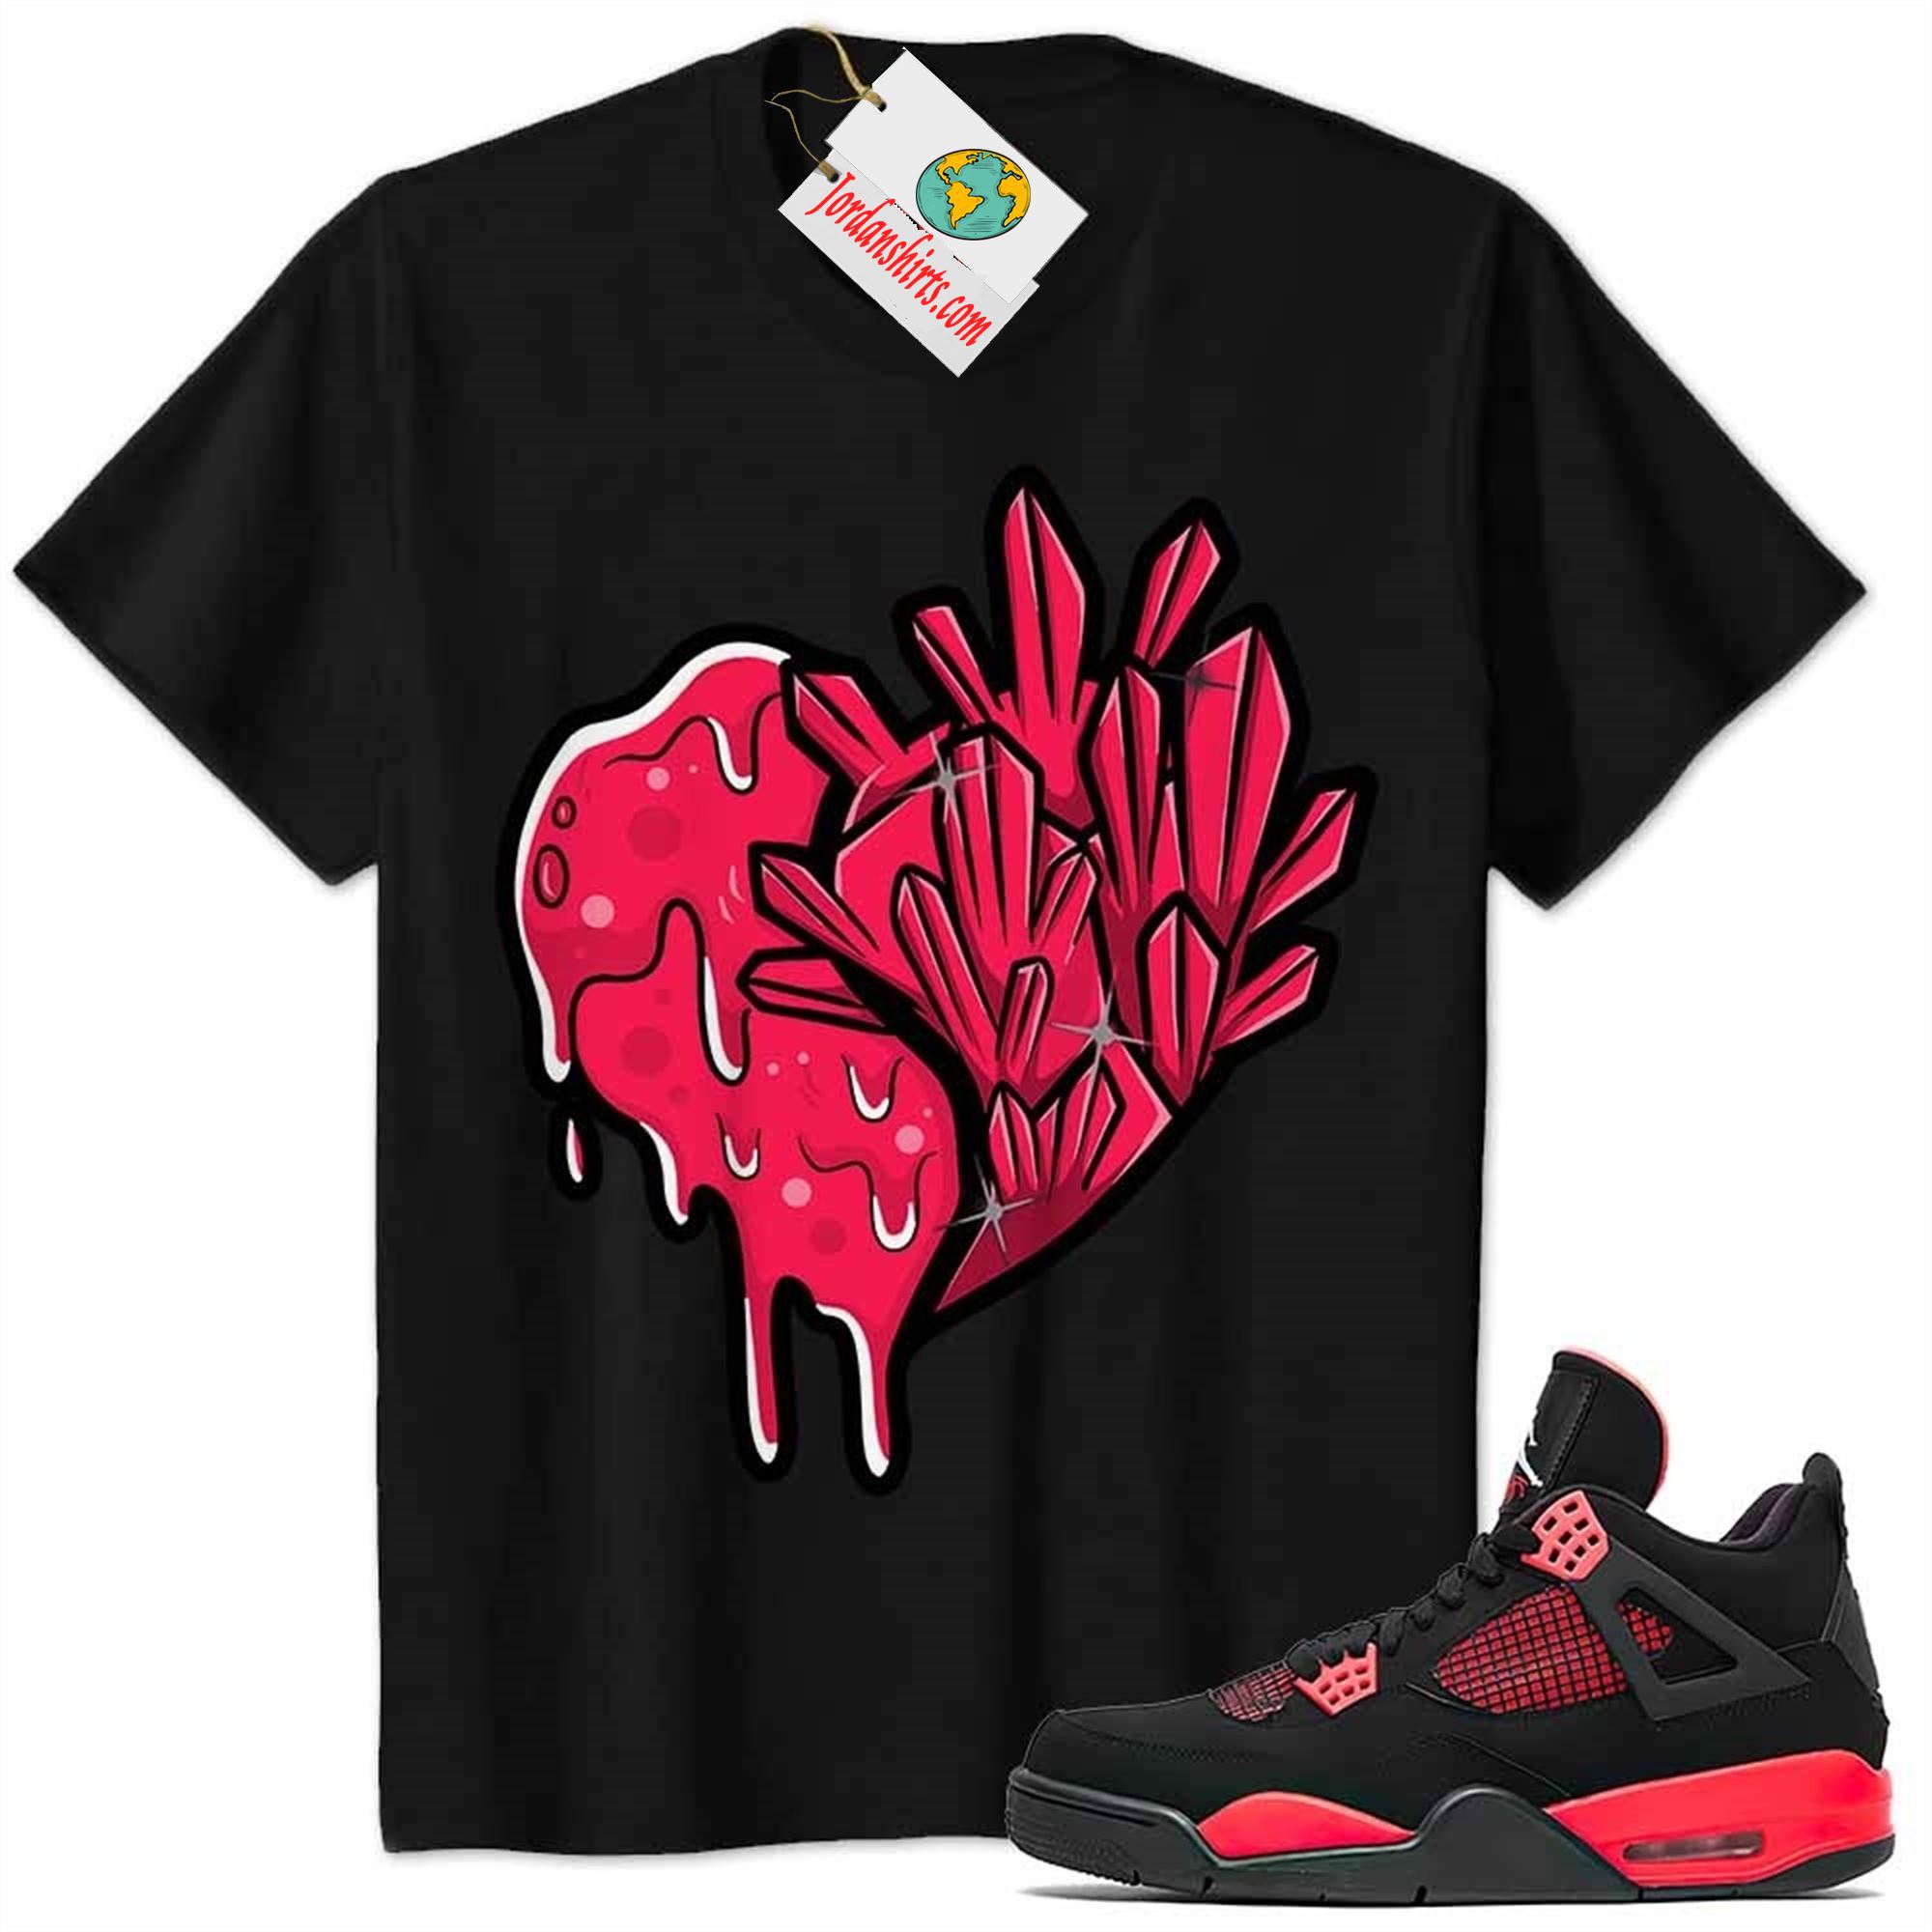 Jordan 4 Shirt, Crystal And Melt Heart Black Air Jordan 4 Red Thunder 4s Full Size Up To 5xl